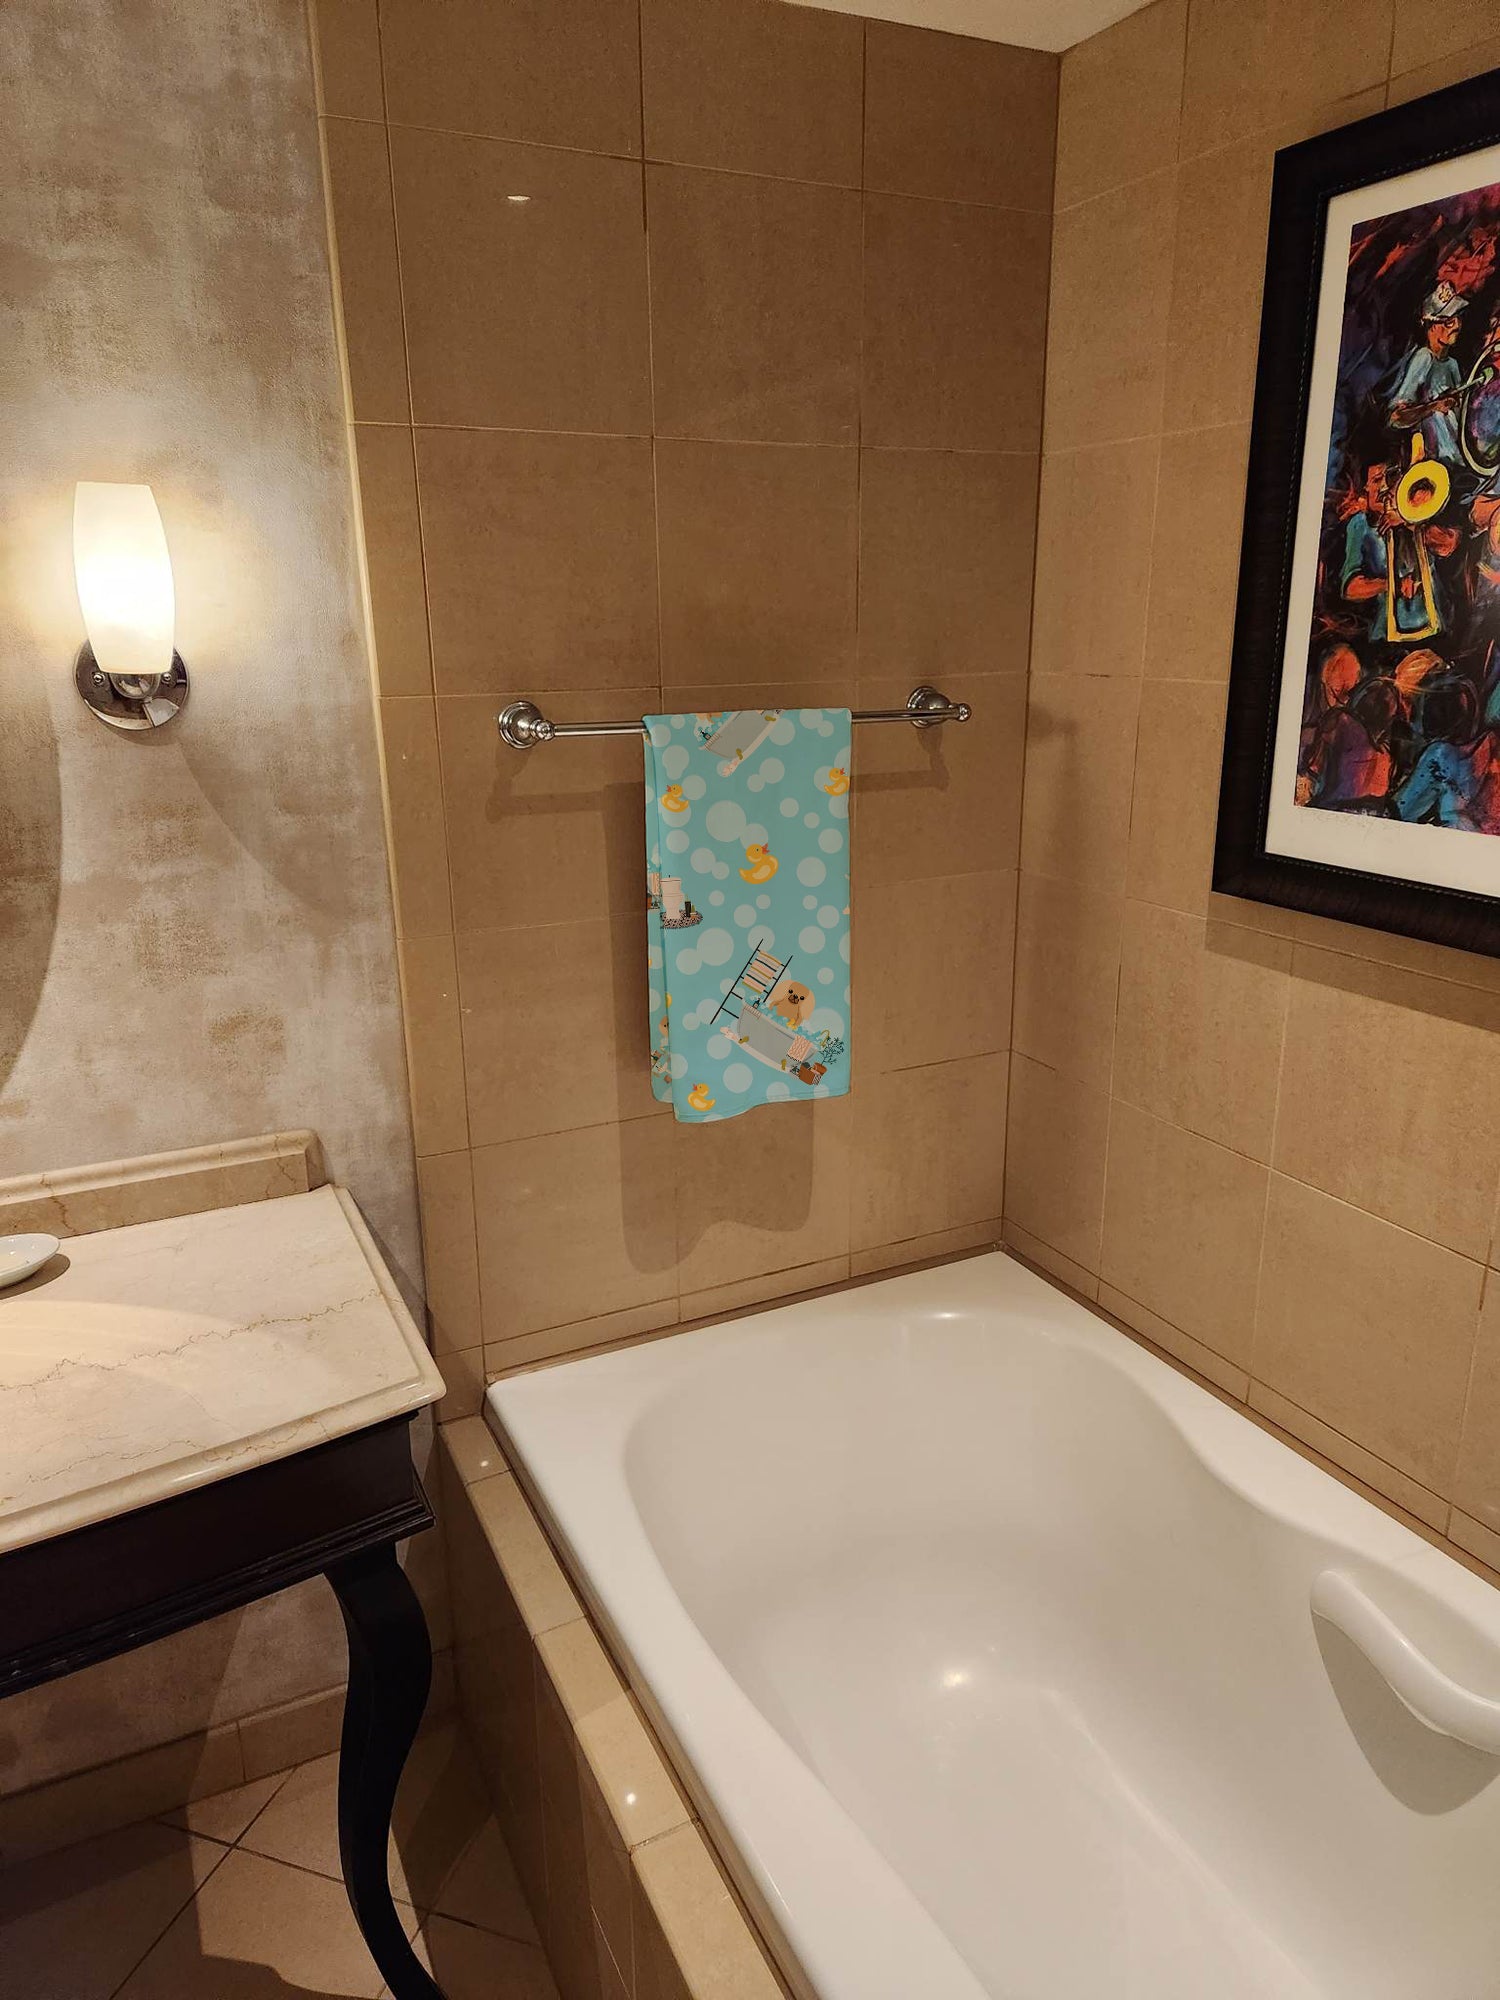 Buy this Fawn Sable Pekingese in Bathtub Bath Towel Large